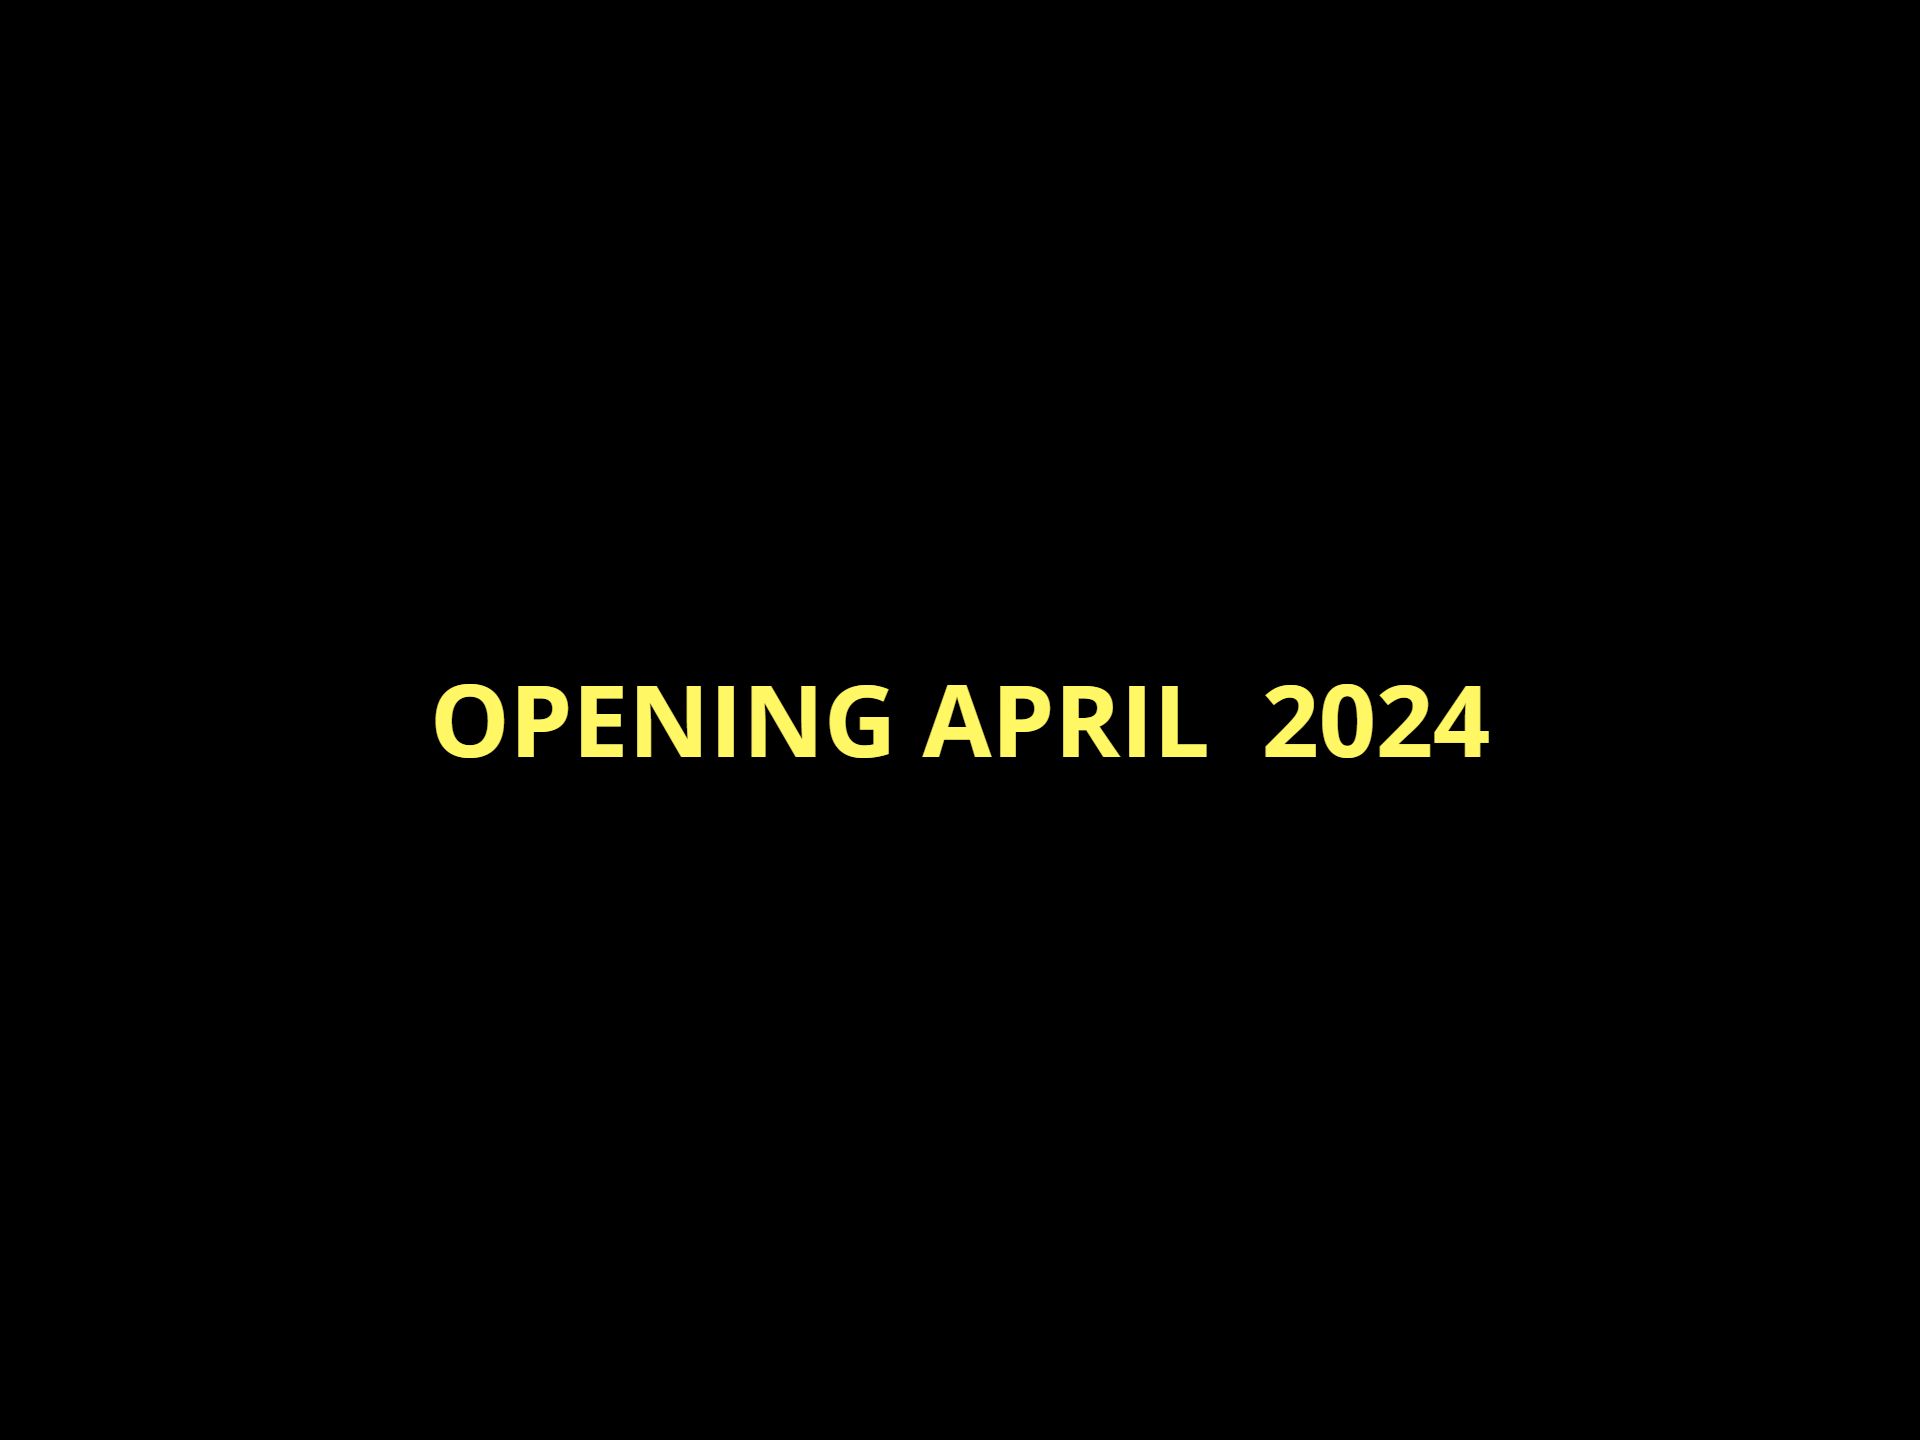 OPENING APRIL 2024